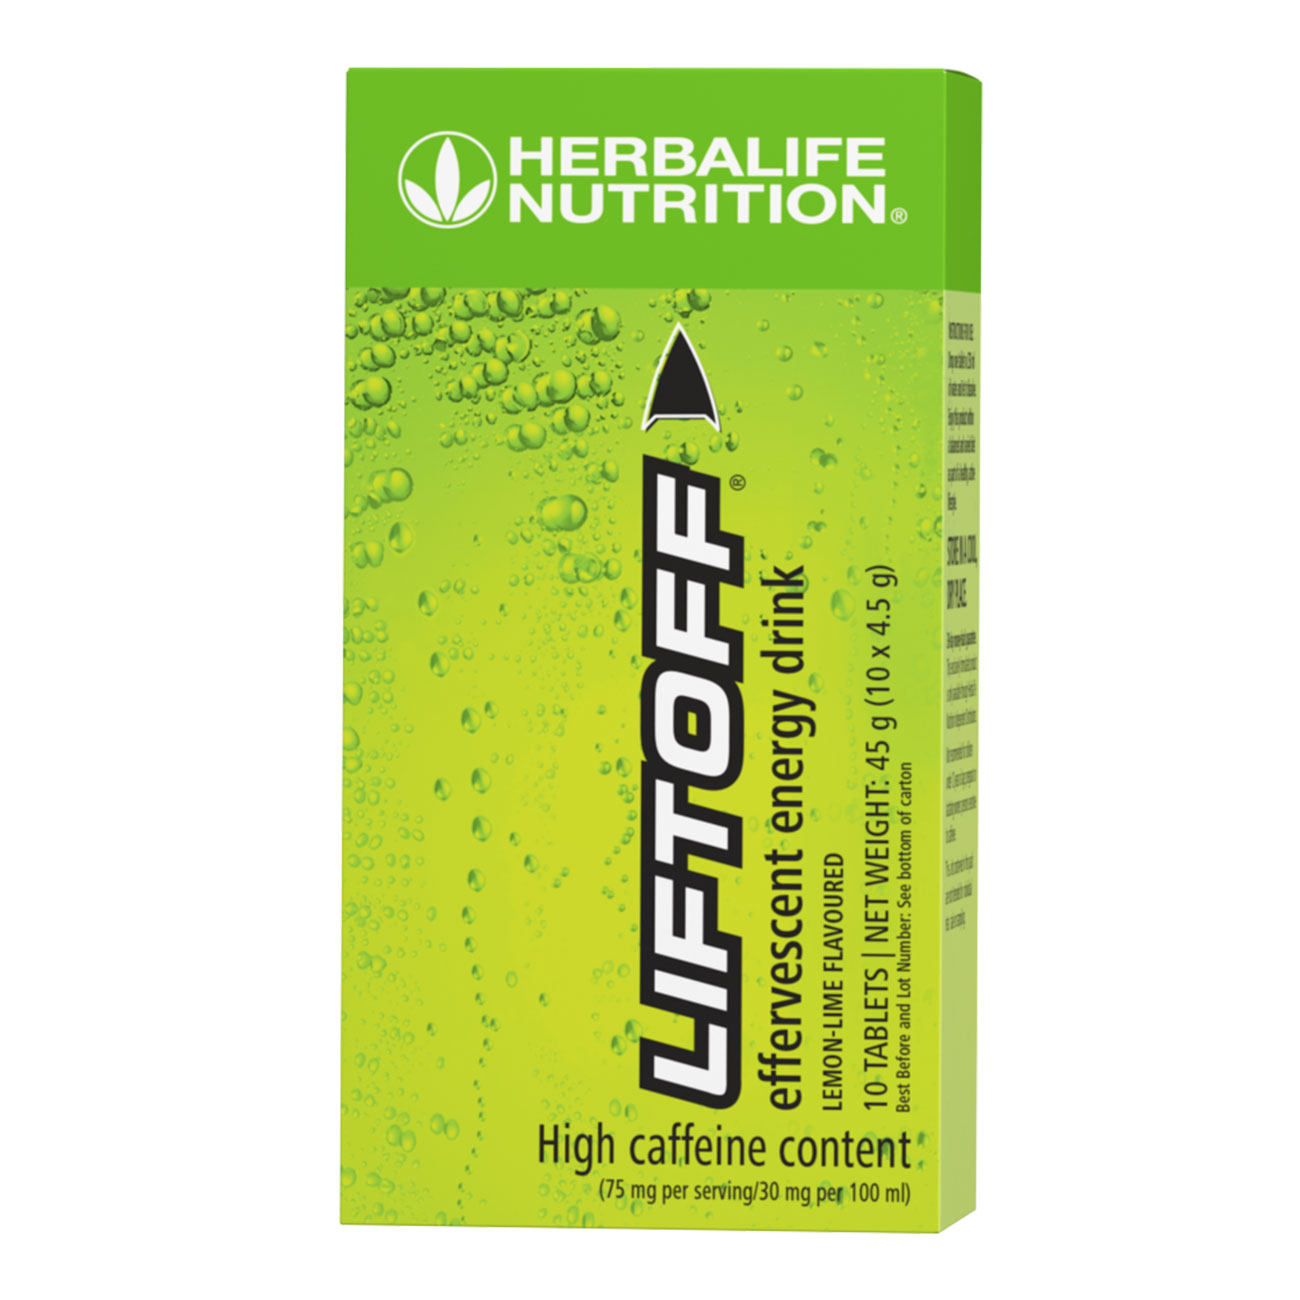 LiftOff® Energy Drink Lemon-Lime Flavoured product shot